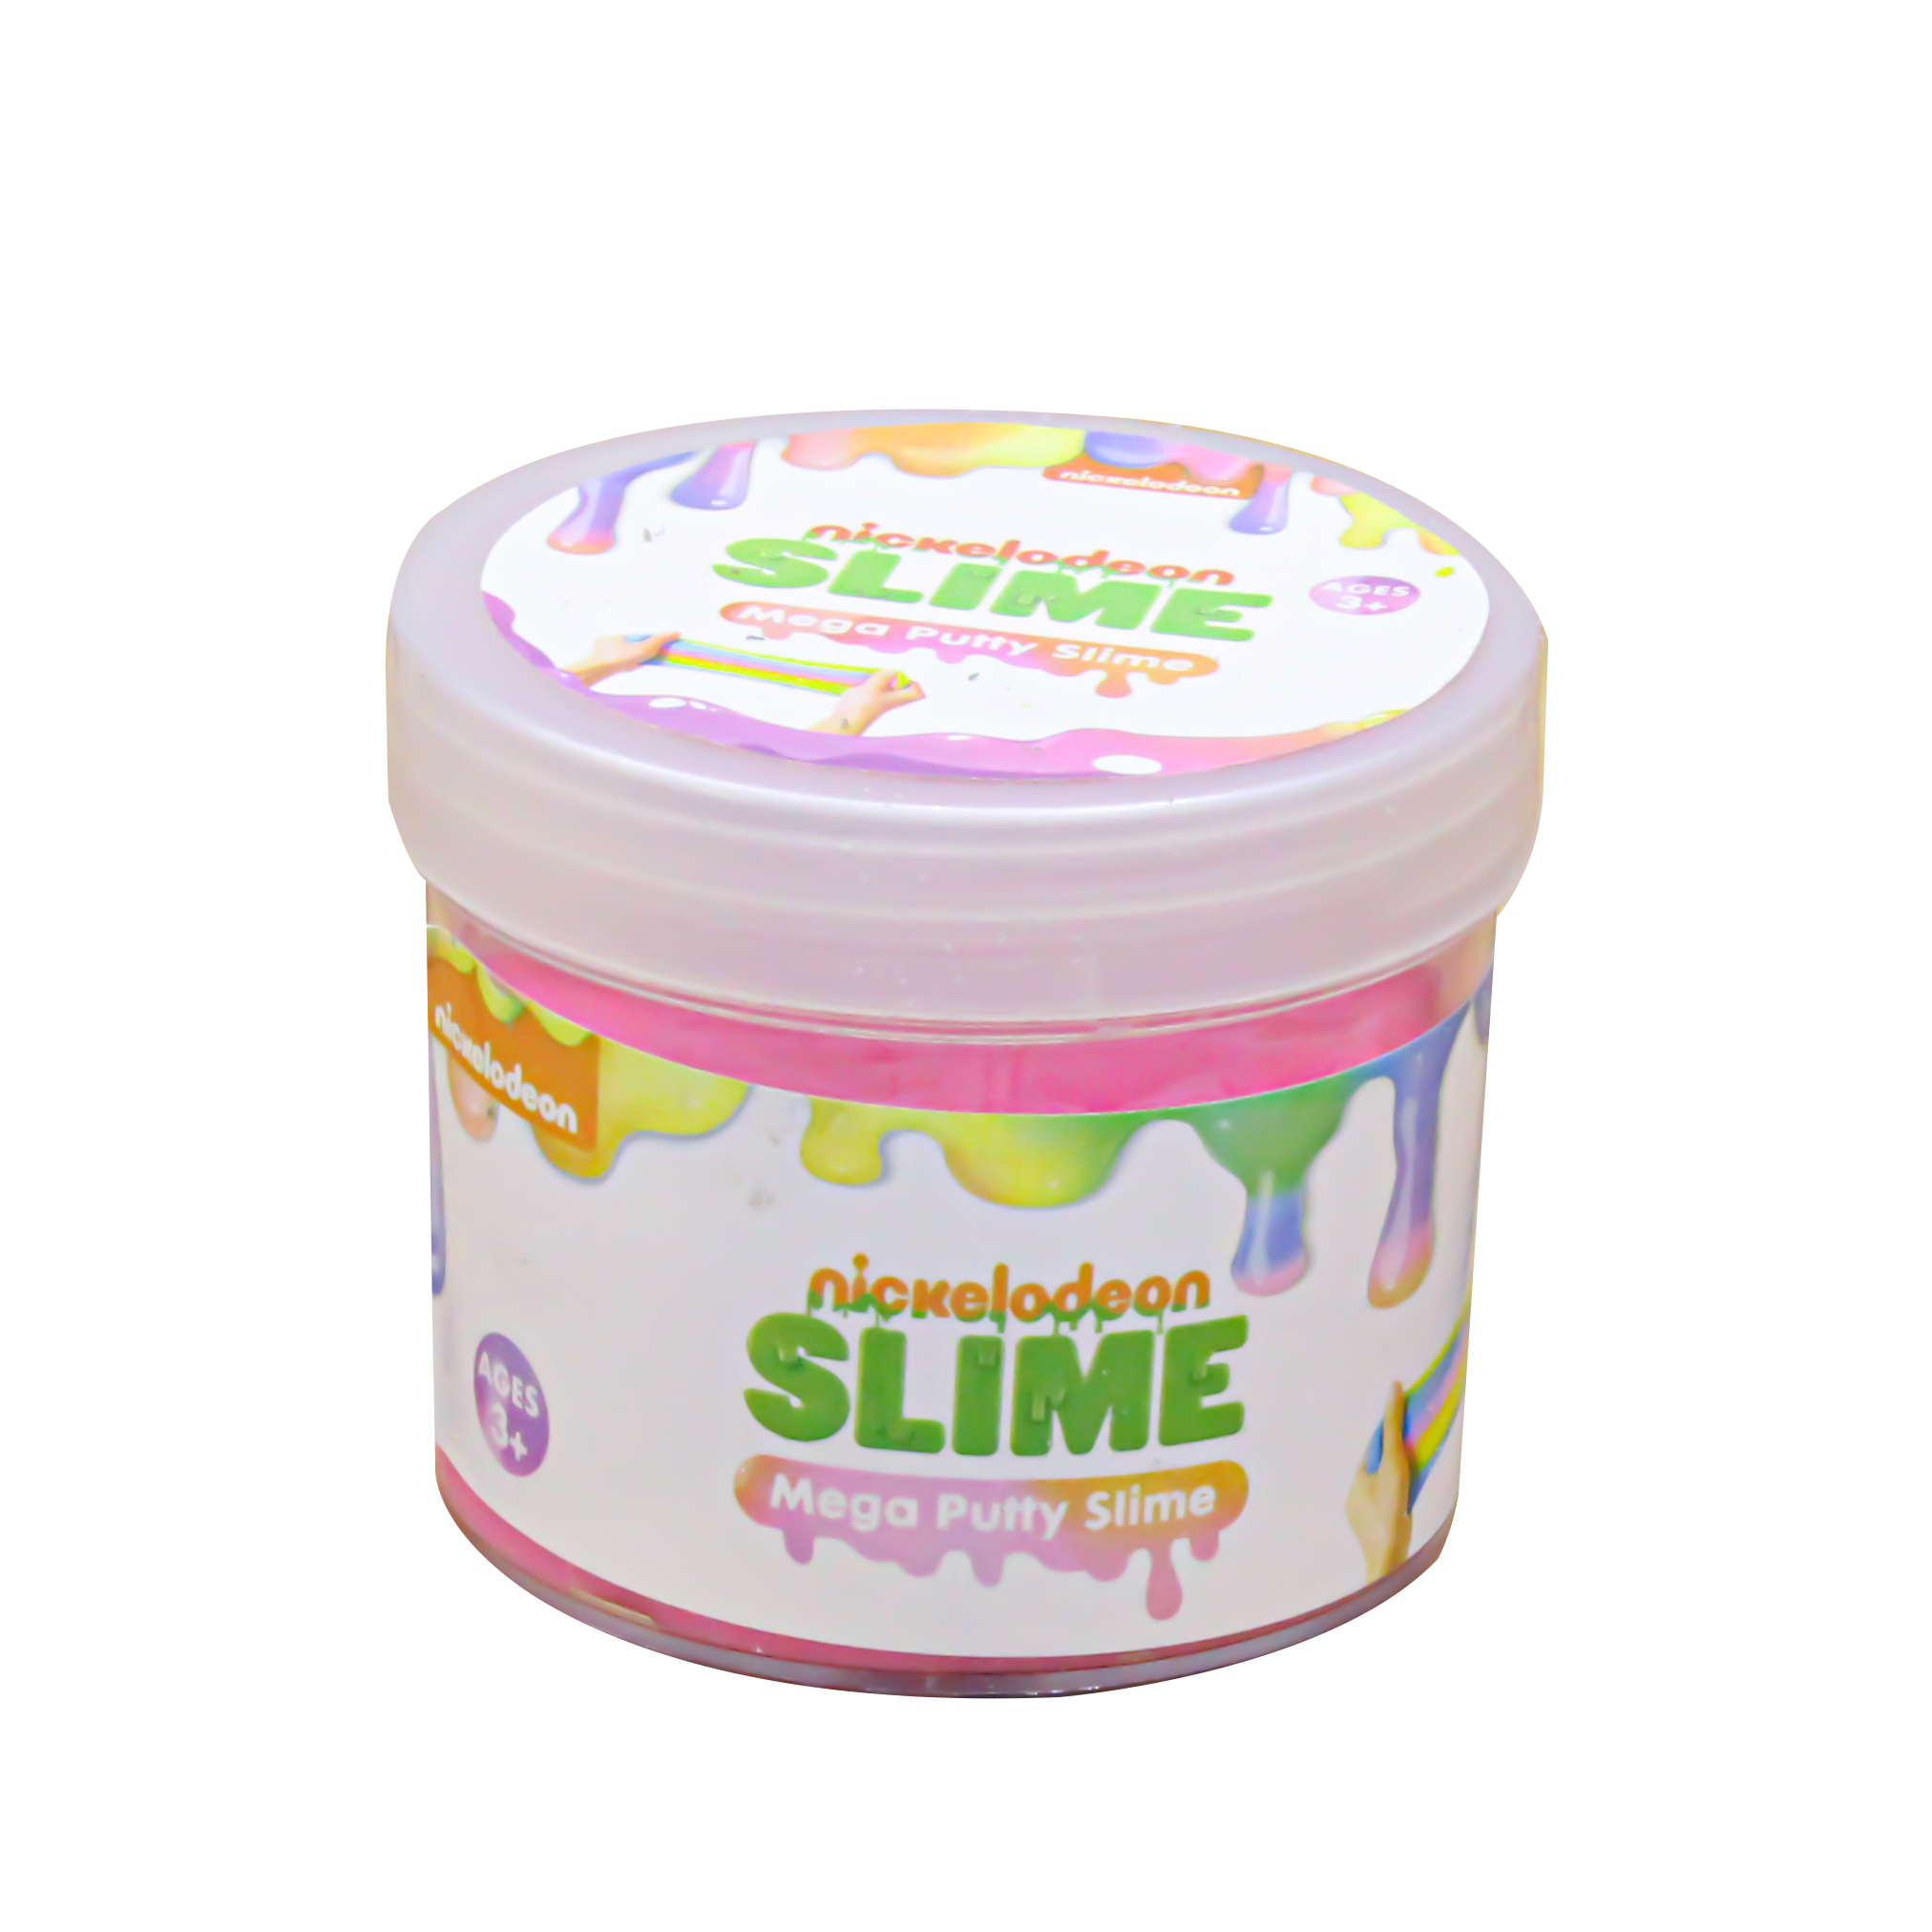 Wow Play Nickelodeon Slime Mega Putty Slime - Pink